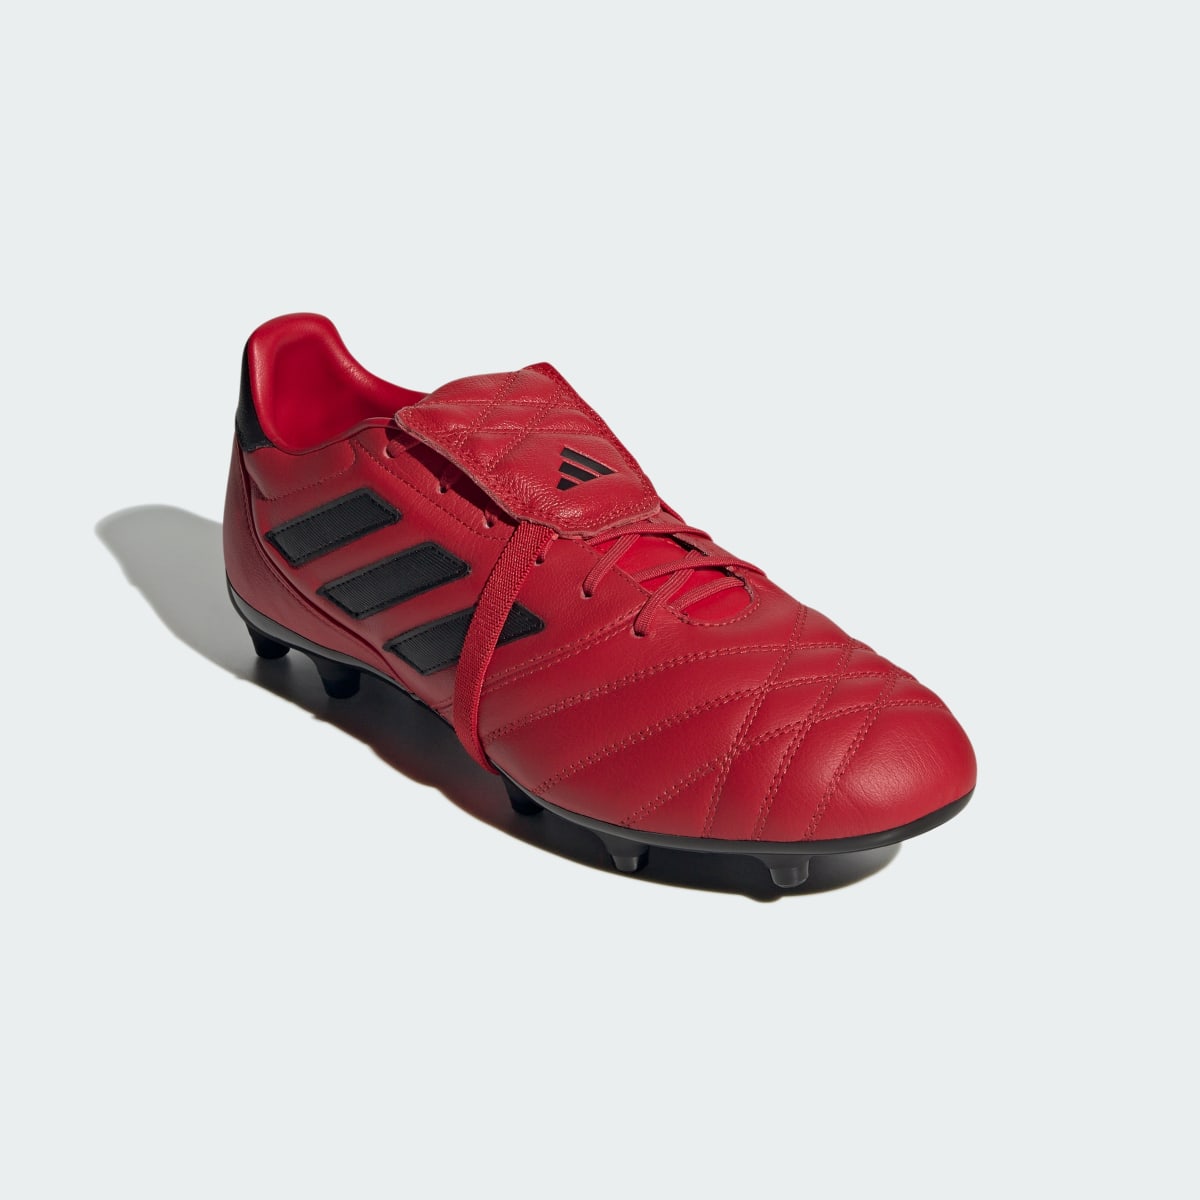 Adidas Copa Gloro Firm Ground Boots. 5